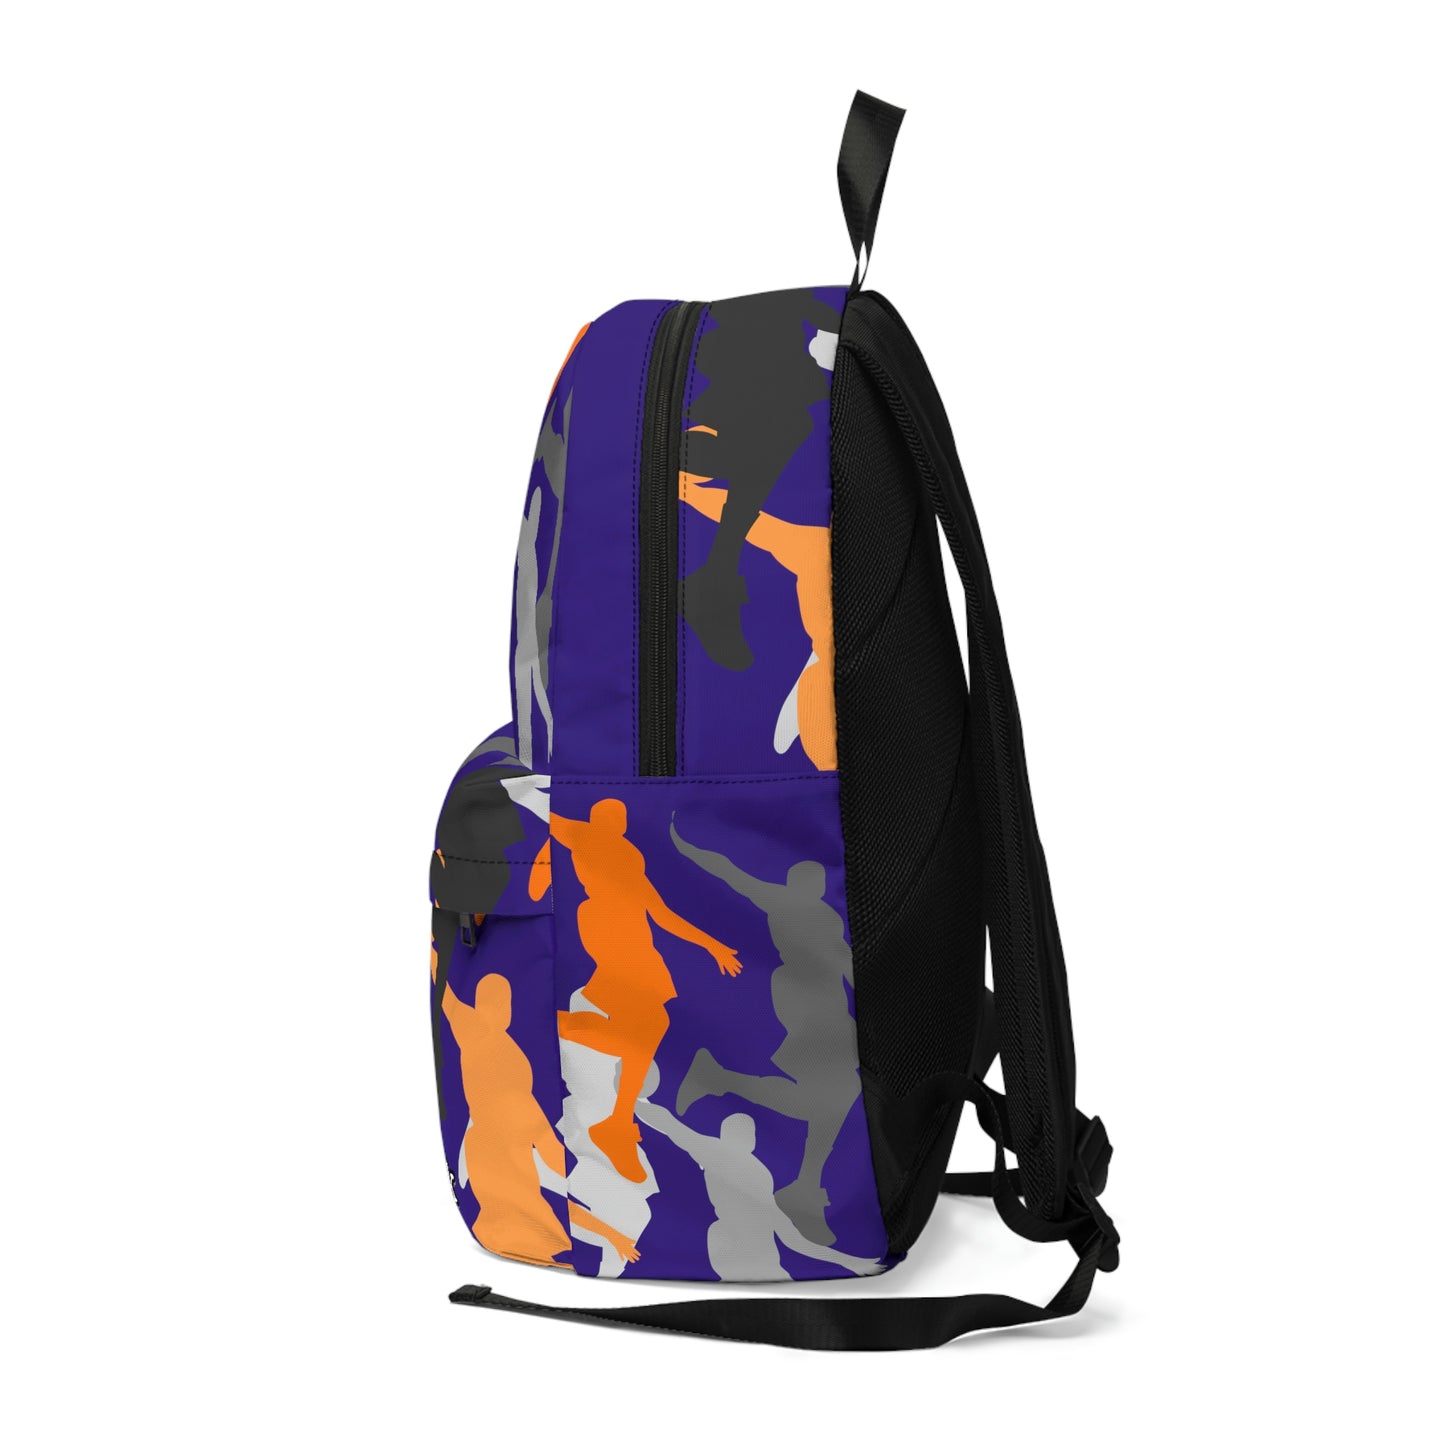 Duntalk "Head Top" Basketball Backpack - Purple Large